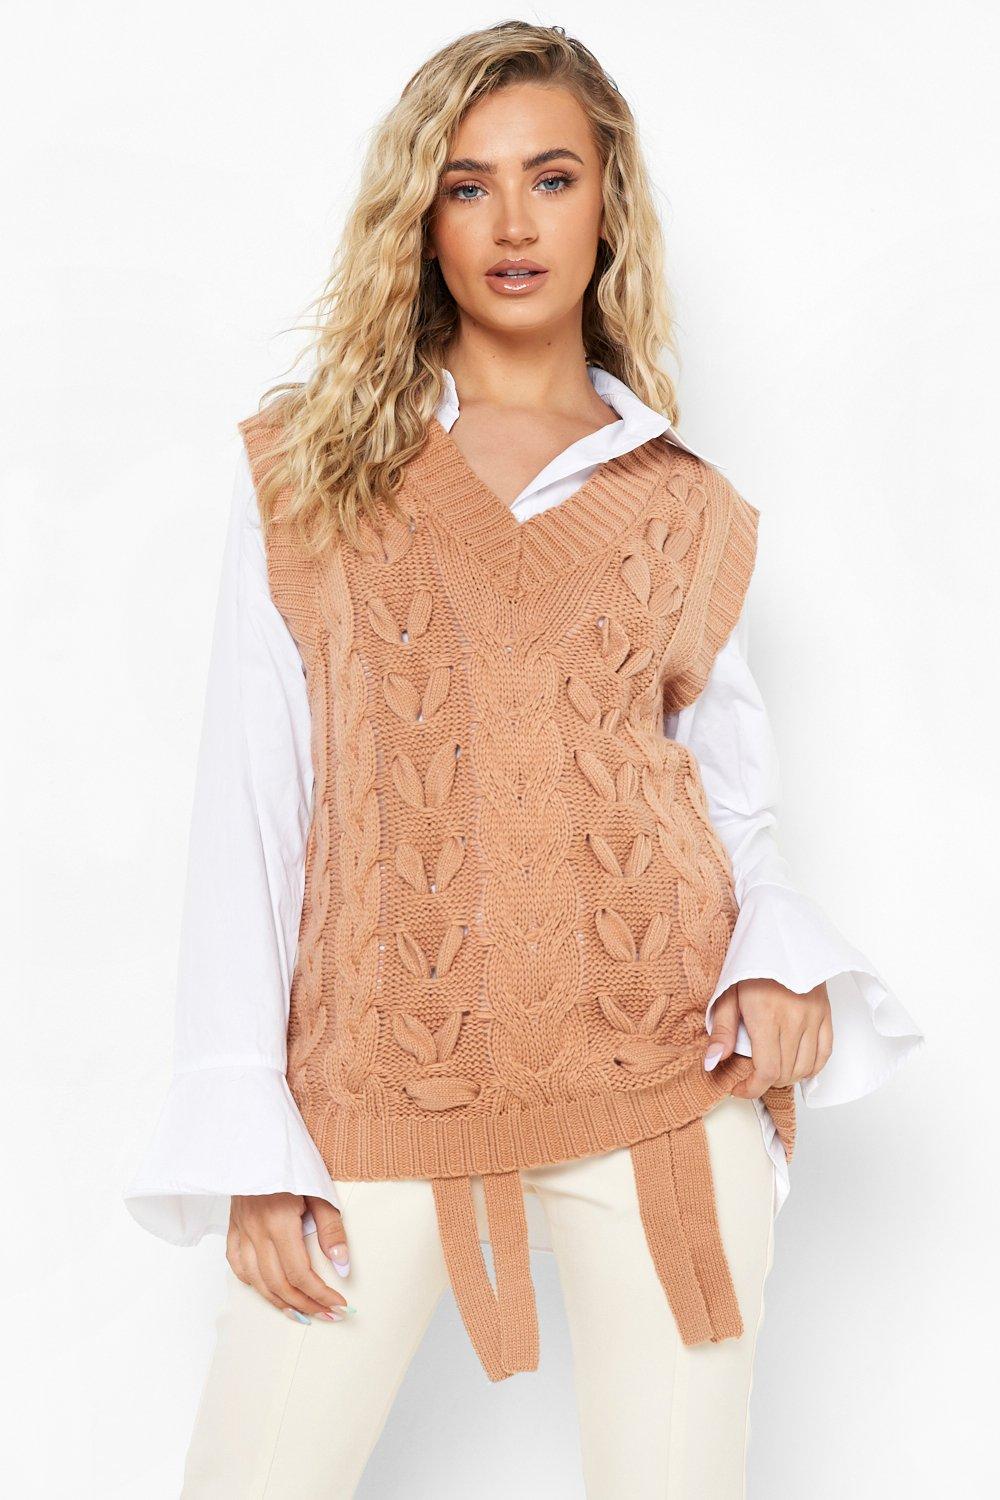 https://media.boohoo.com/i/boohoo/fzz24513_camel_xl_3/female-camel-chunky-lace-up-cable-knit-sweater-tank-top